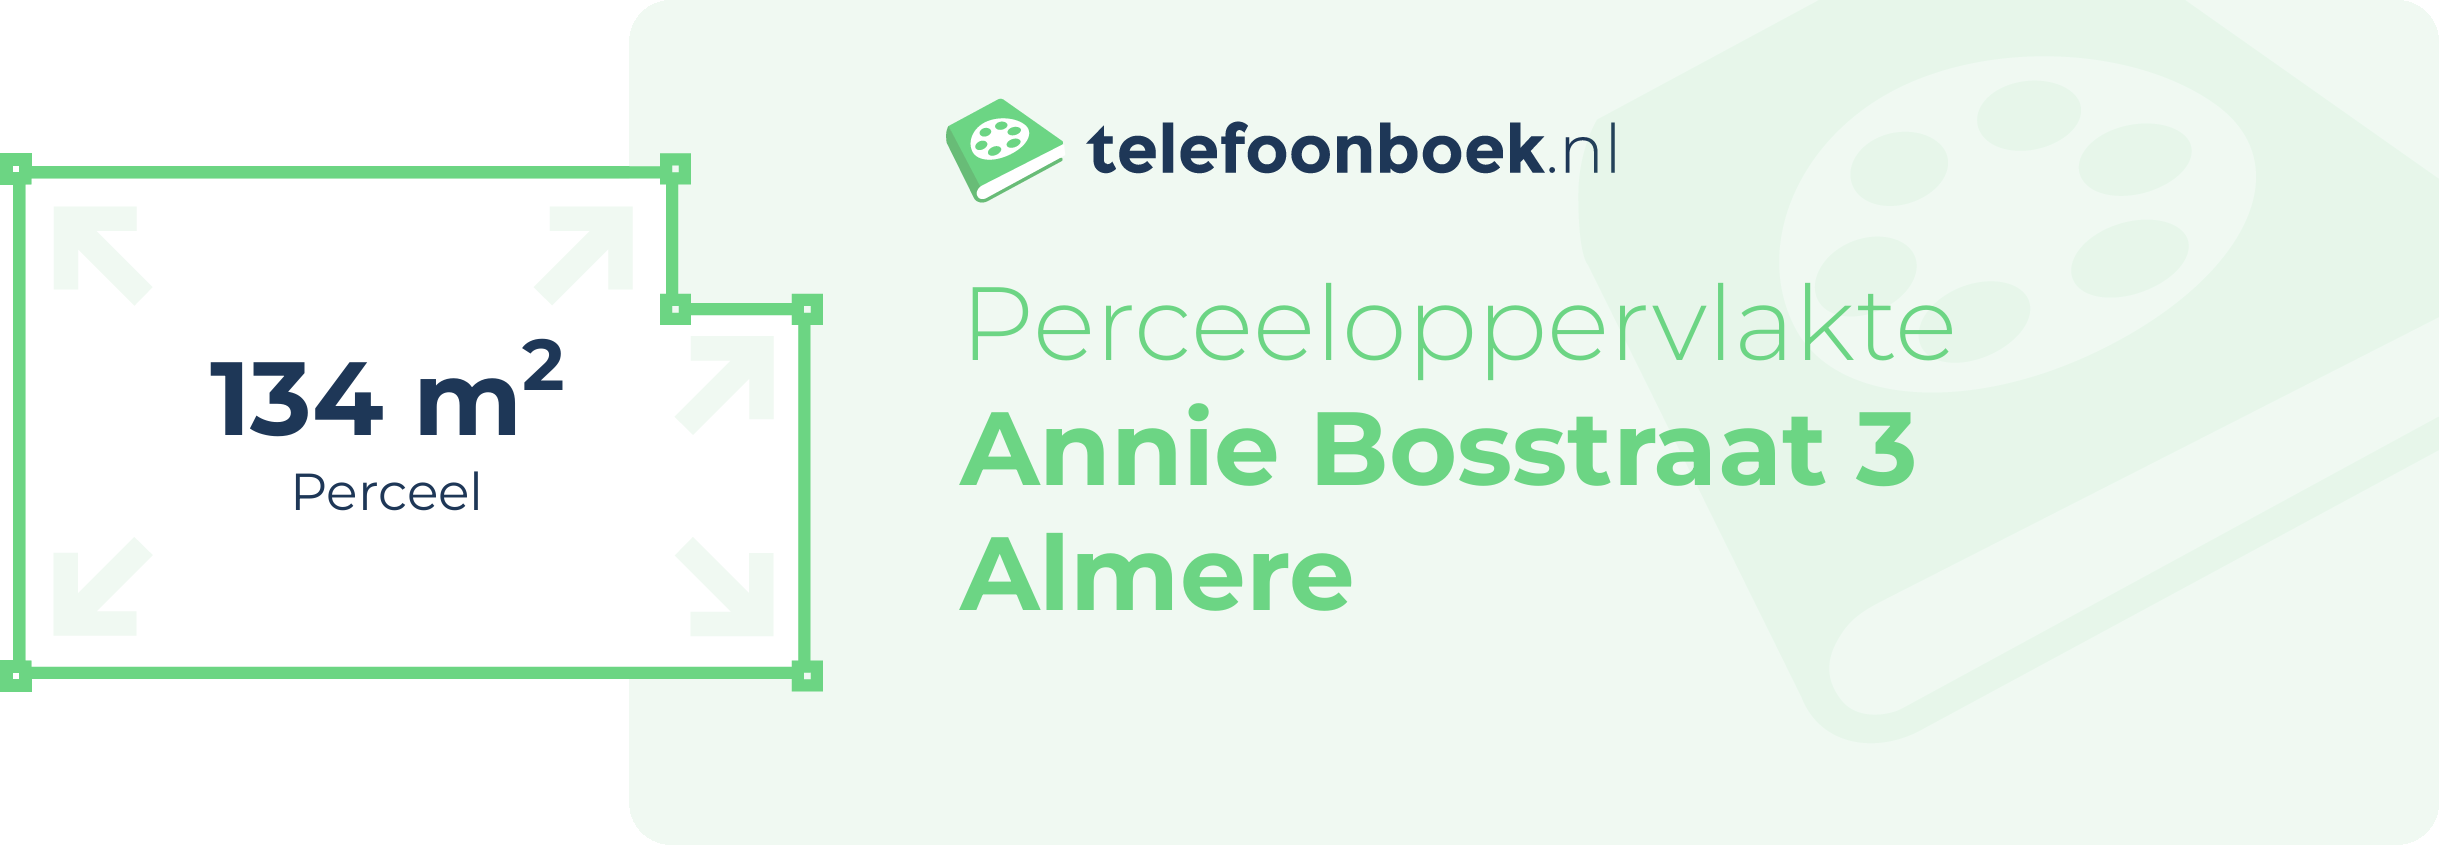 Perceeloppervlakte Annie Bosstraat 3 Almere